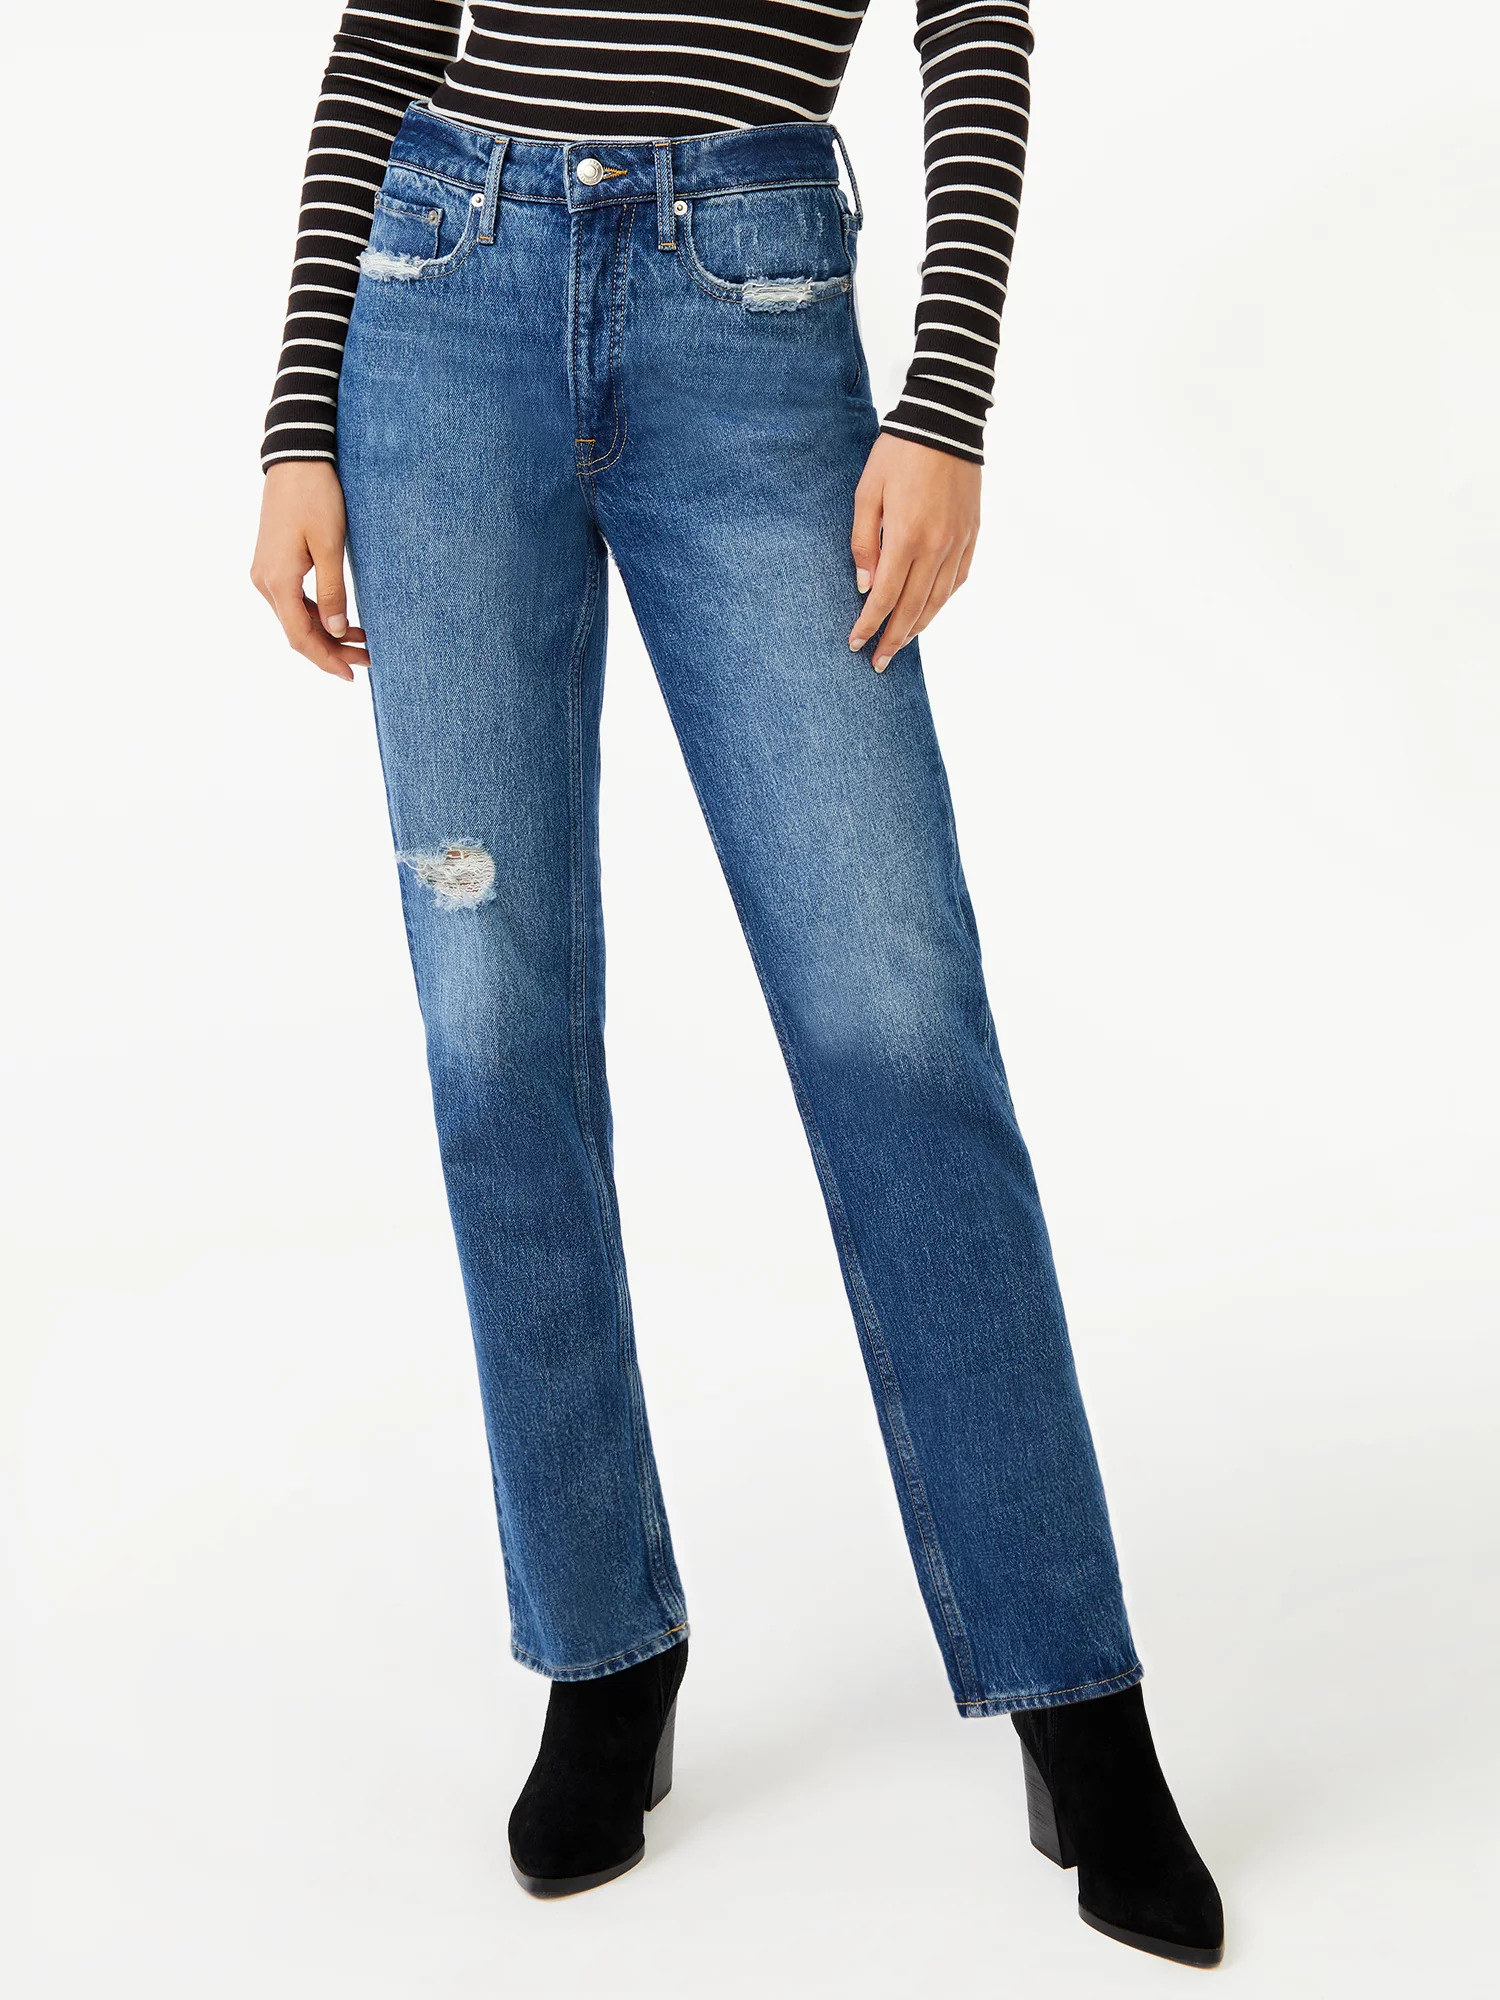 Model wearing the straight dark wash jeans